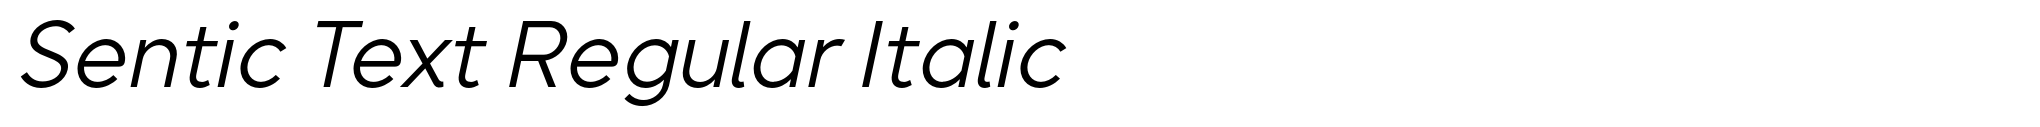 Sentic Text Regular Italic image